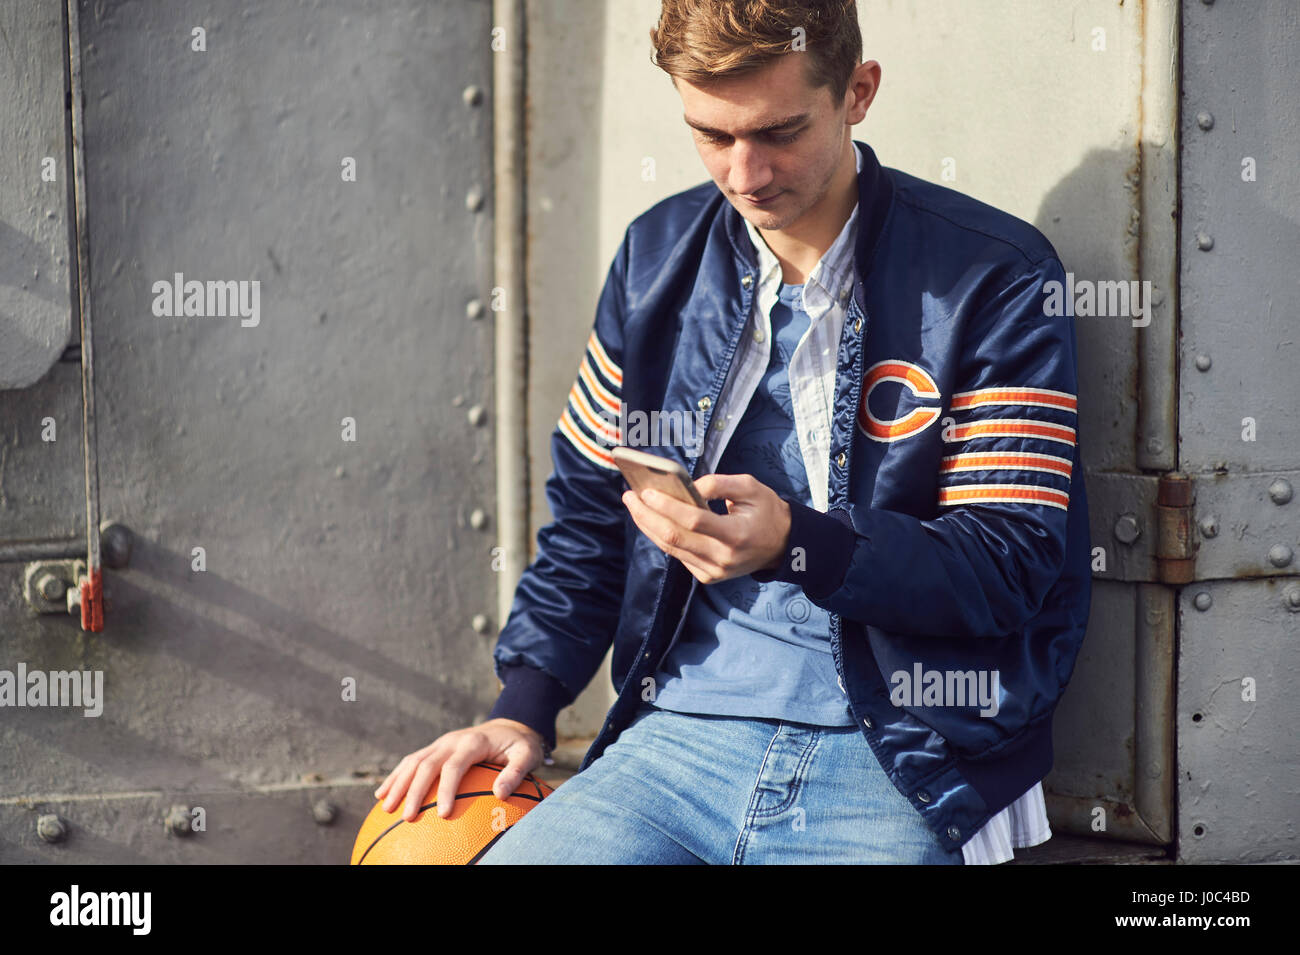 Young man sitting outdoors, using smartphone, holding basketball, Bristol, UK Stock Photo